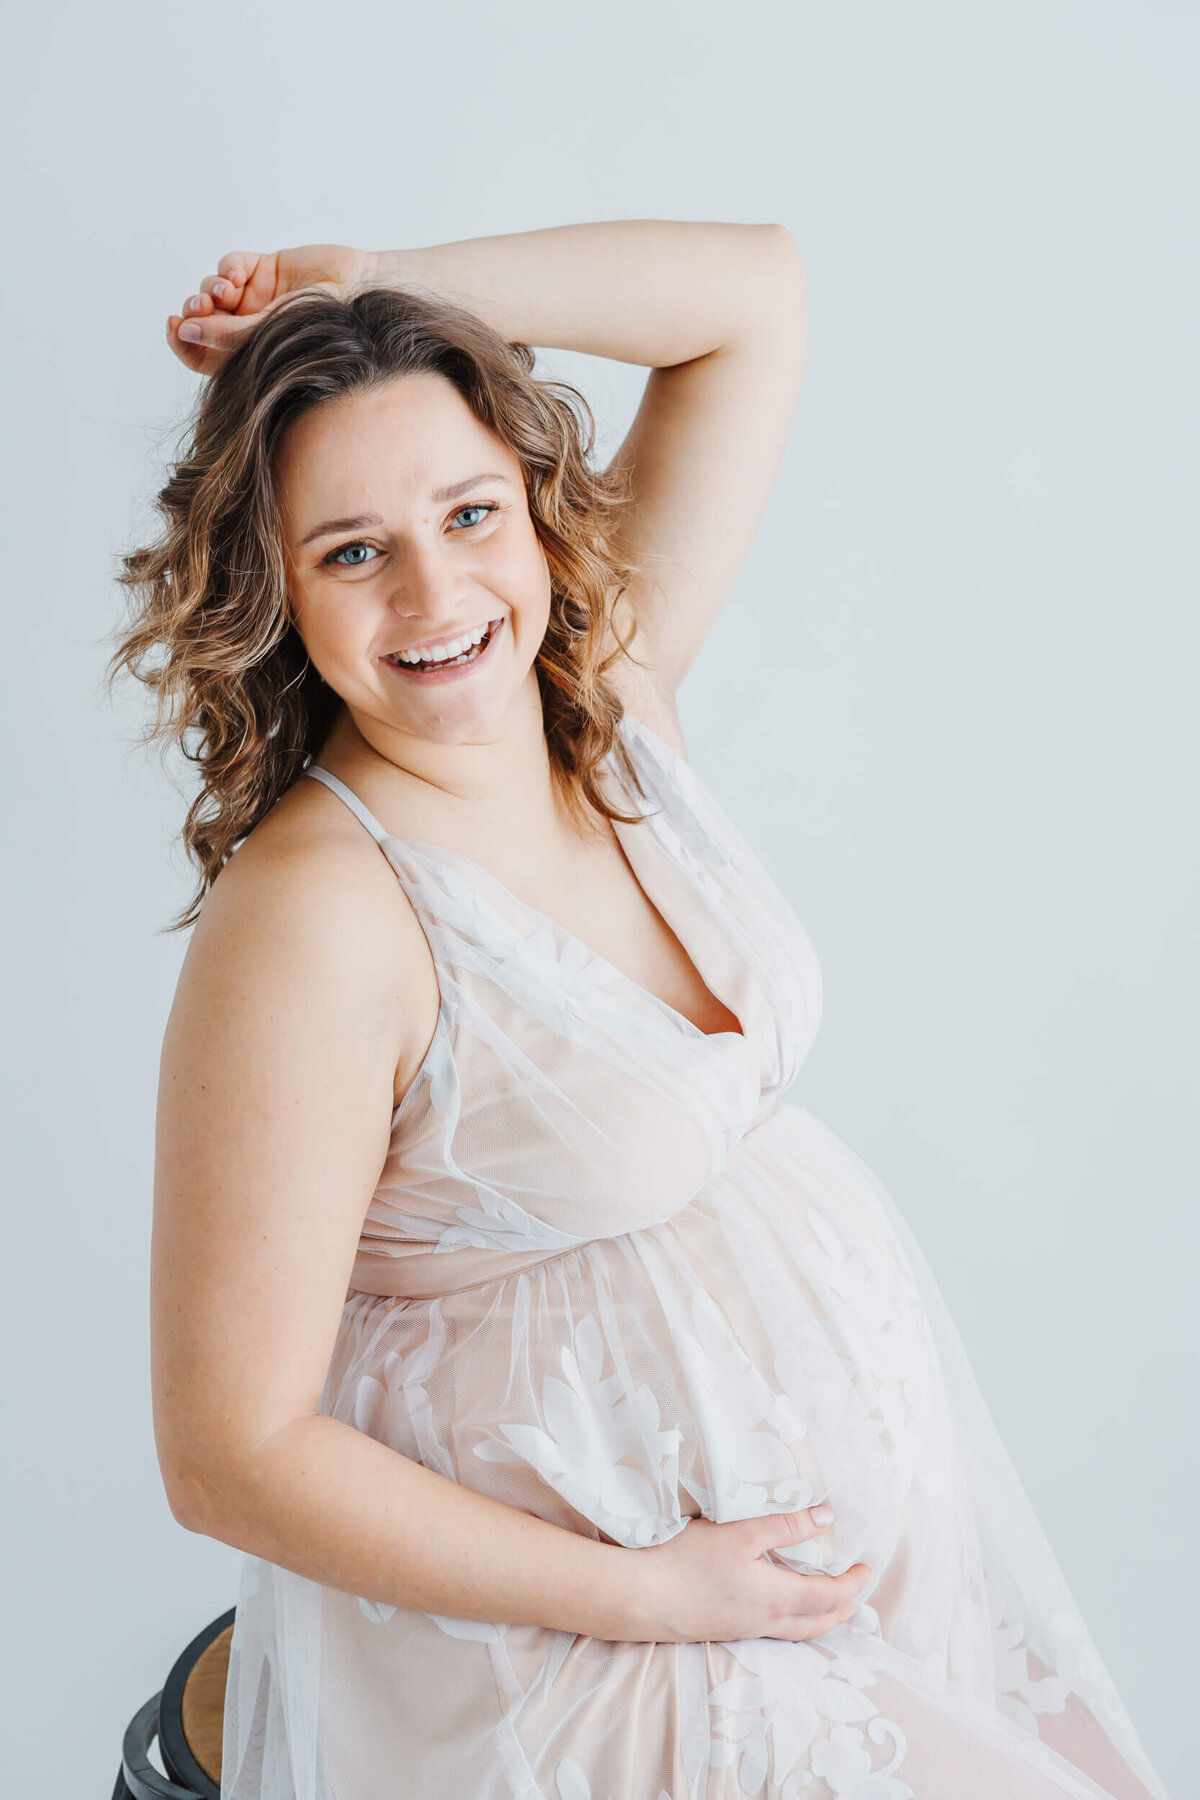 Guelph-Maternity-Photographer.jpg-5512